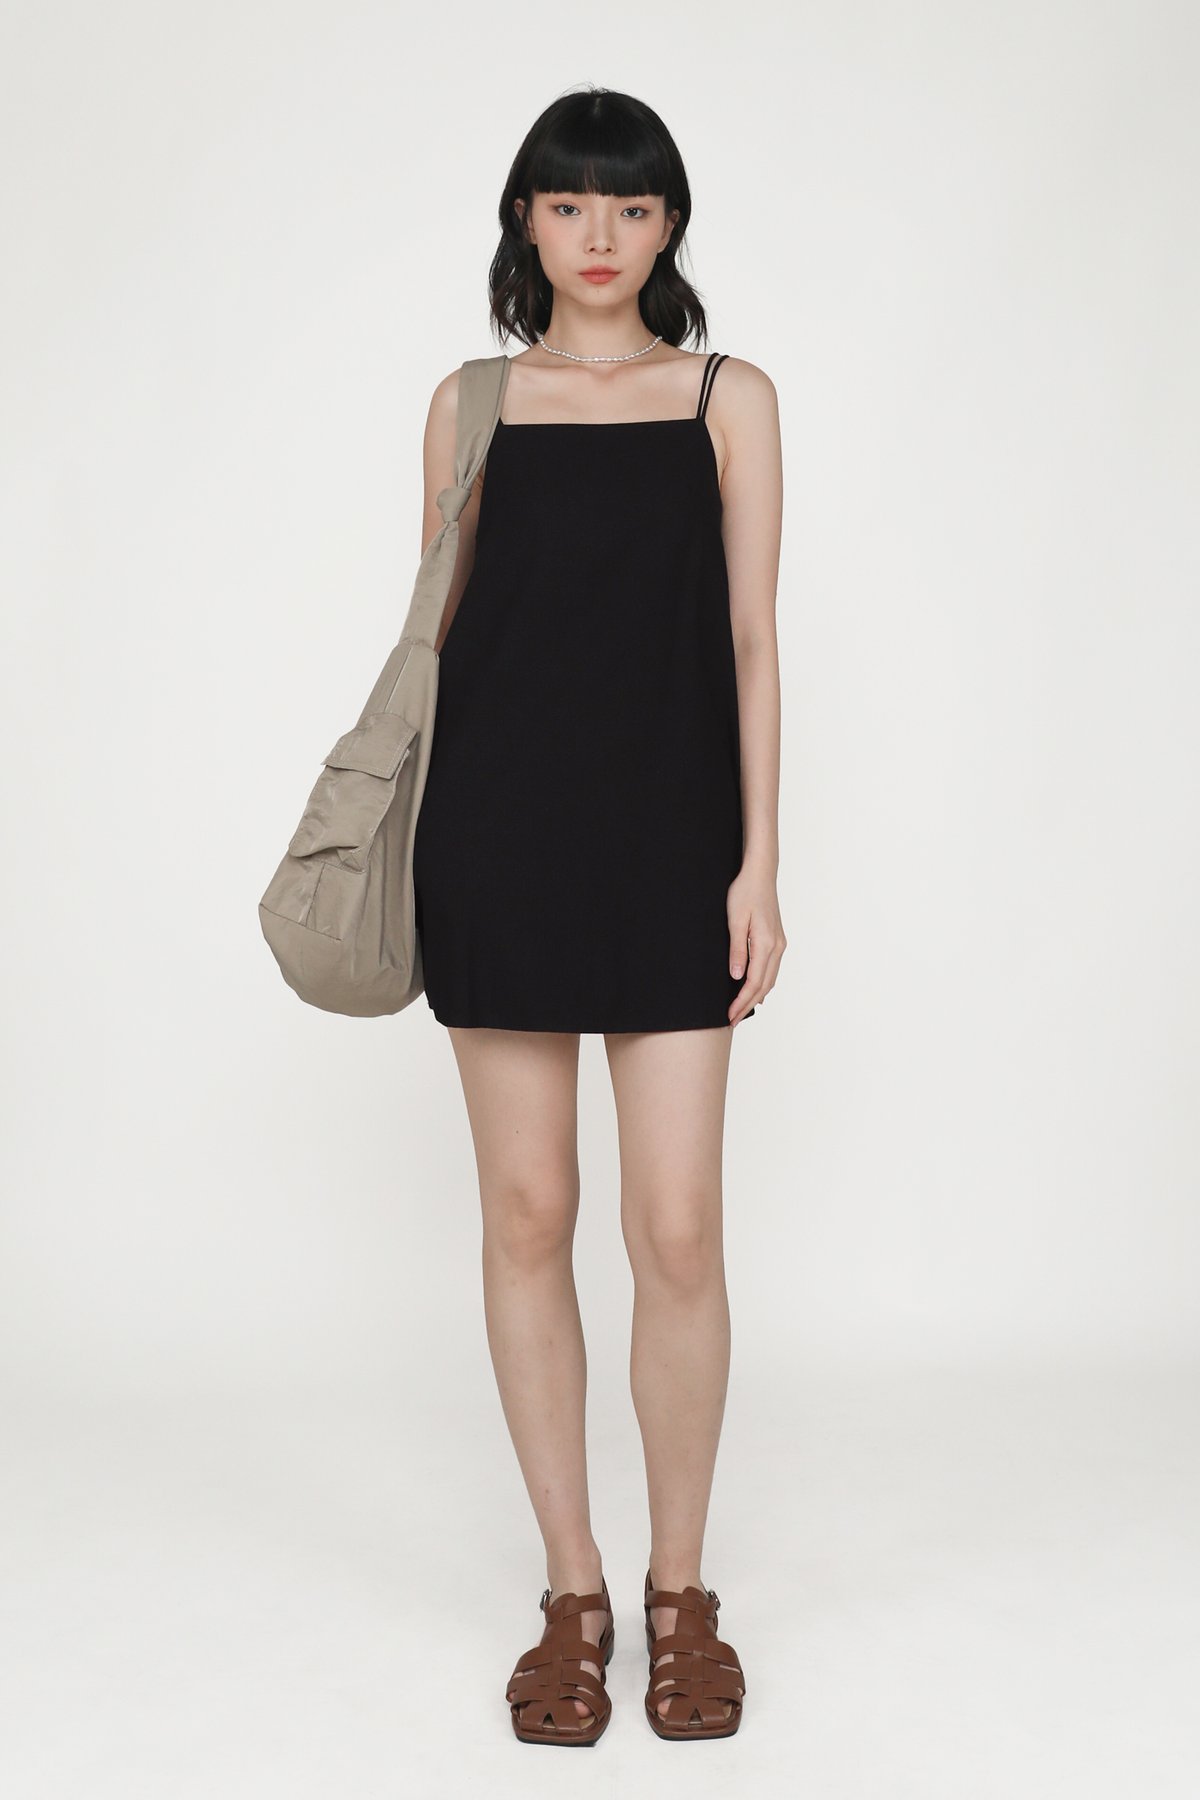 Ambrose Linen Basic Dress (Black)